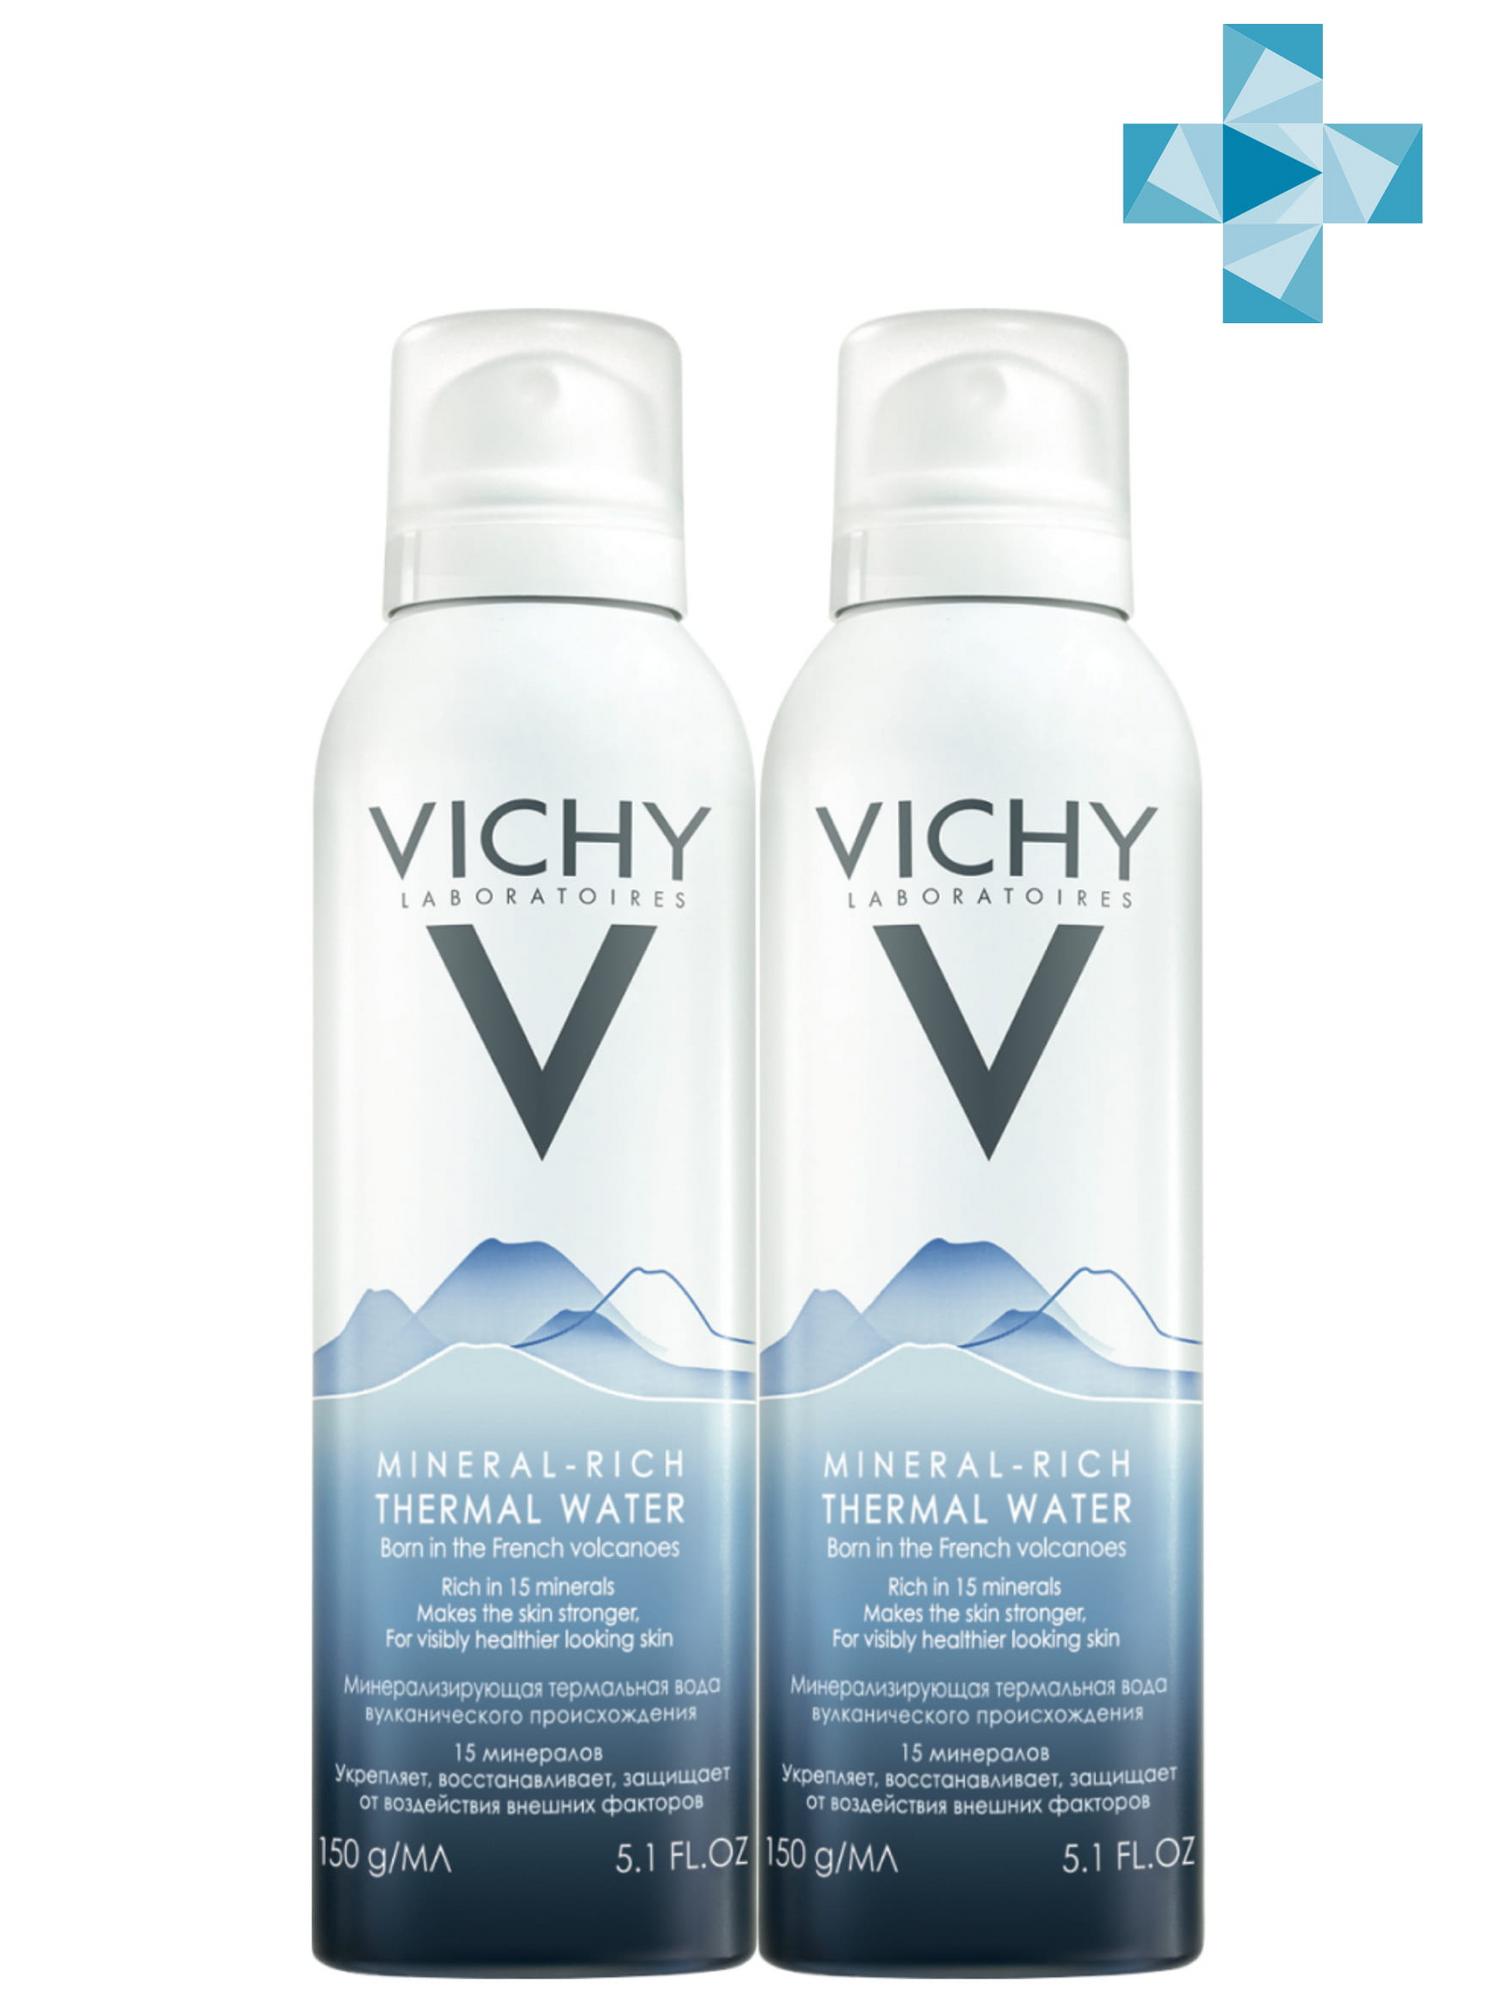 Vichy Комплект Вулканическая термальная вода, 2 х 150 мл (Vichy, Thermal Water Vichy)